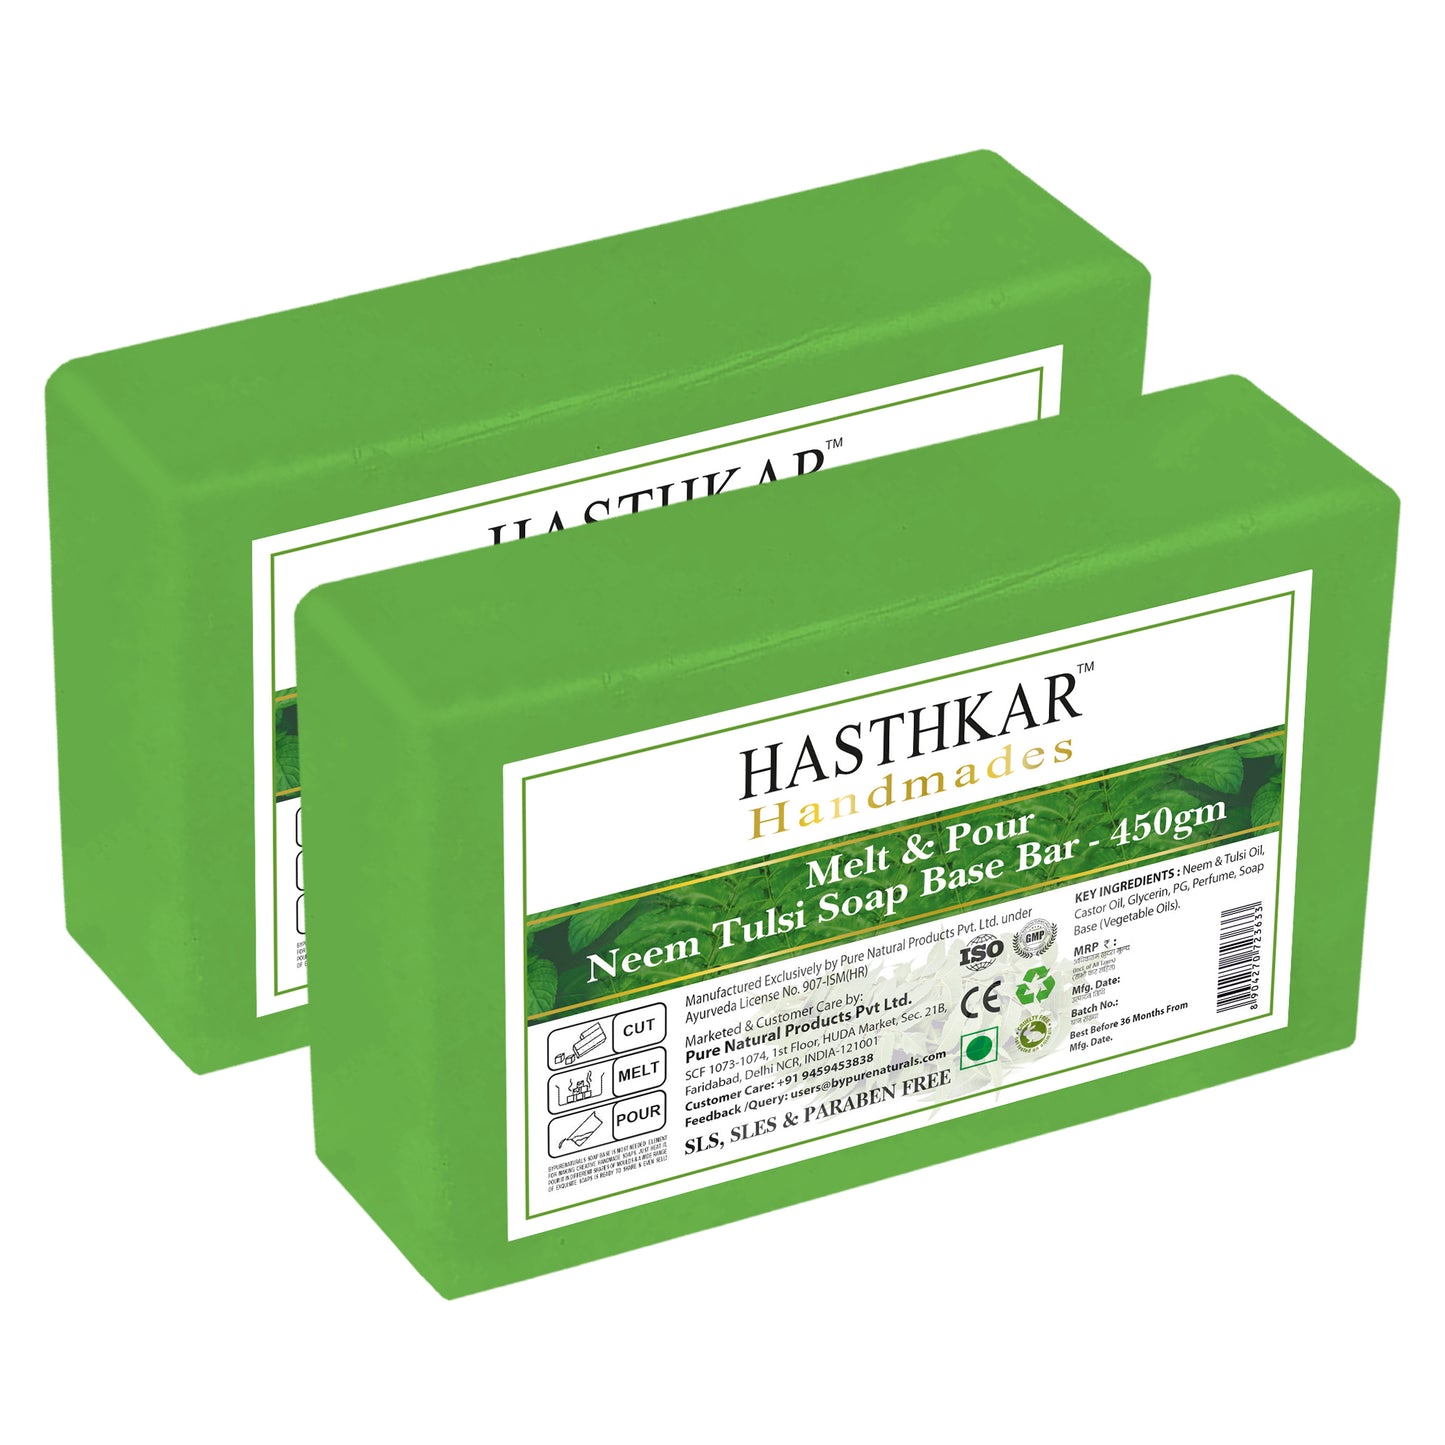 Hasthkar Handmades Neem Tulsi SLS Paraben Free Soap base (pack of 2) 45gm